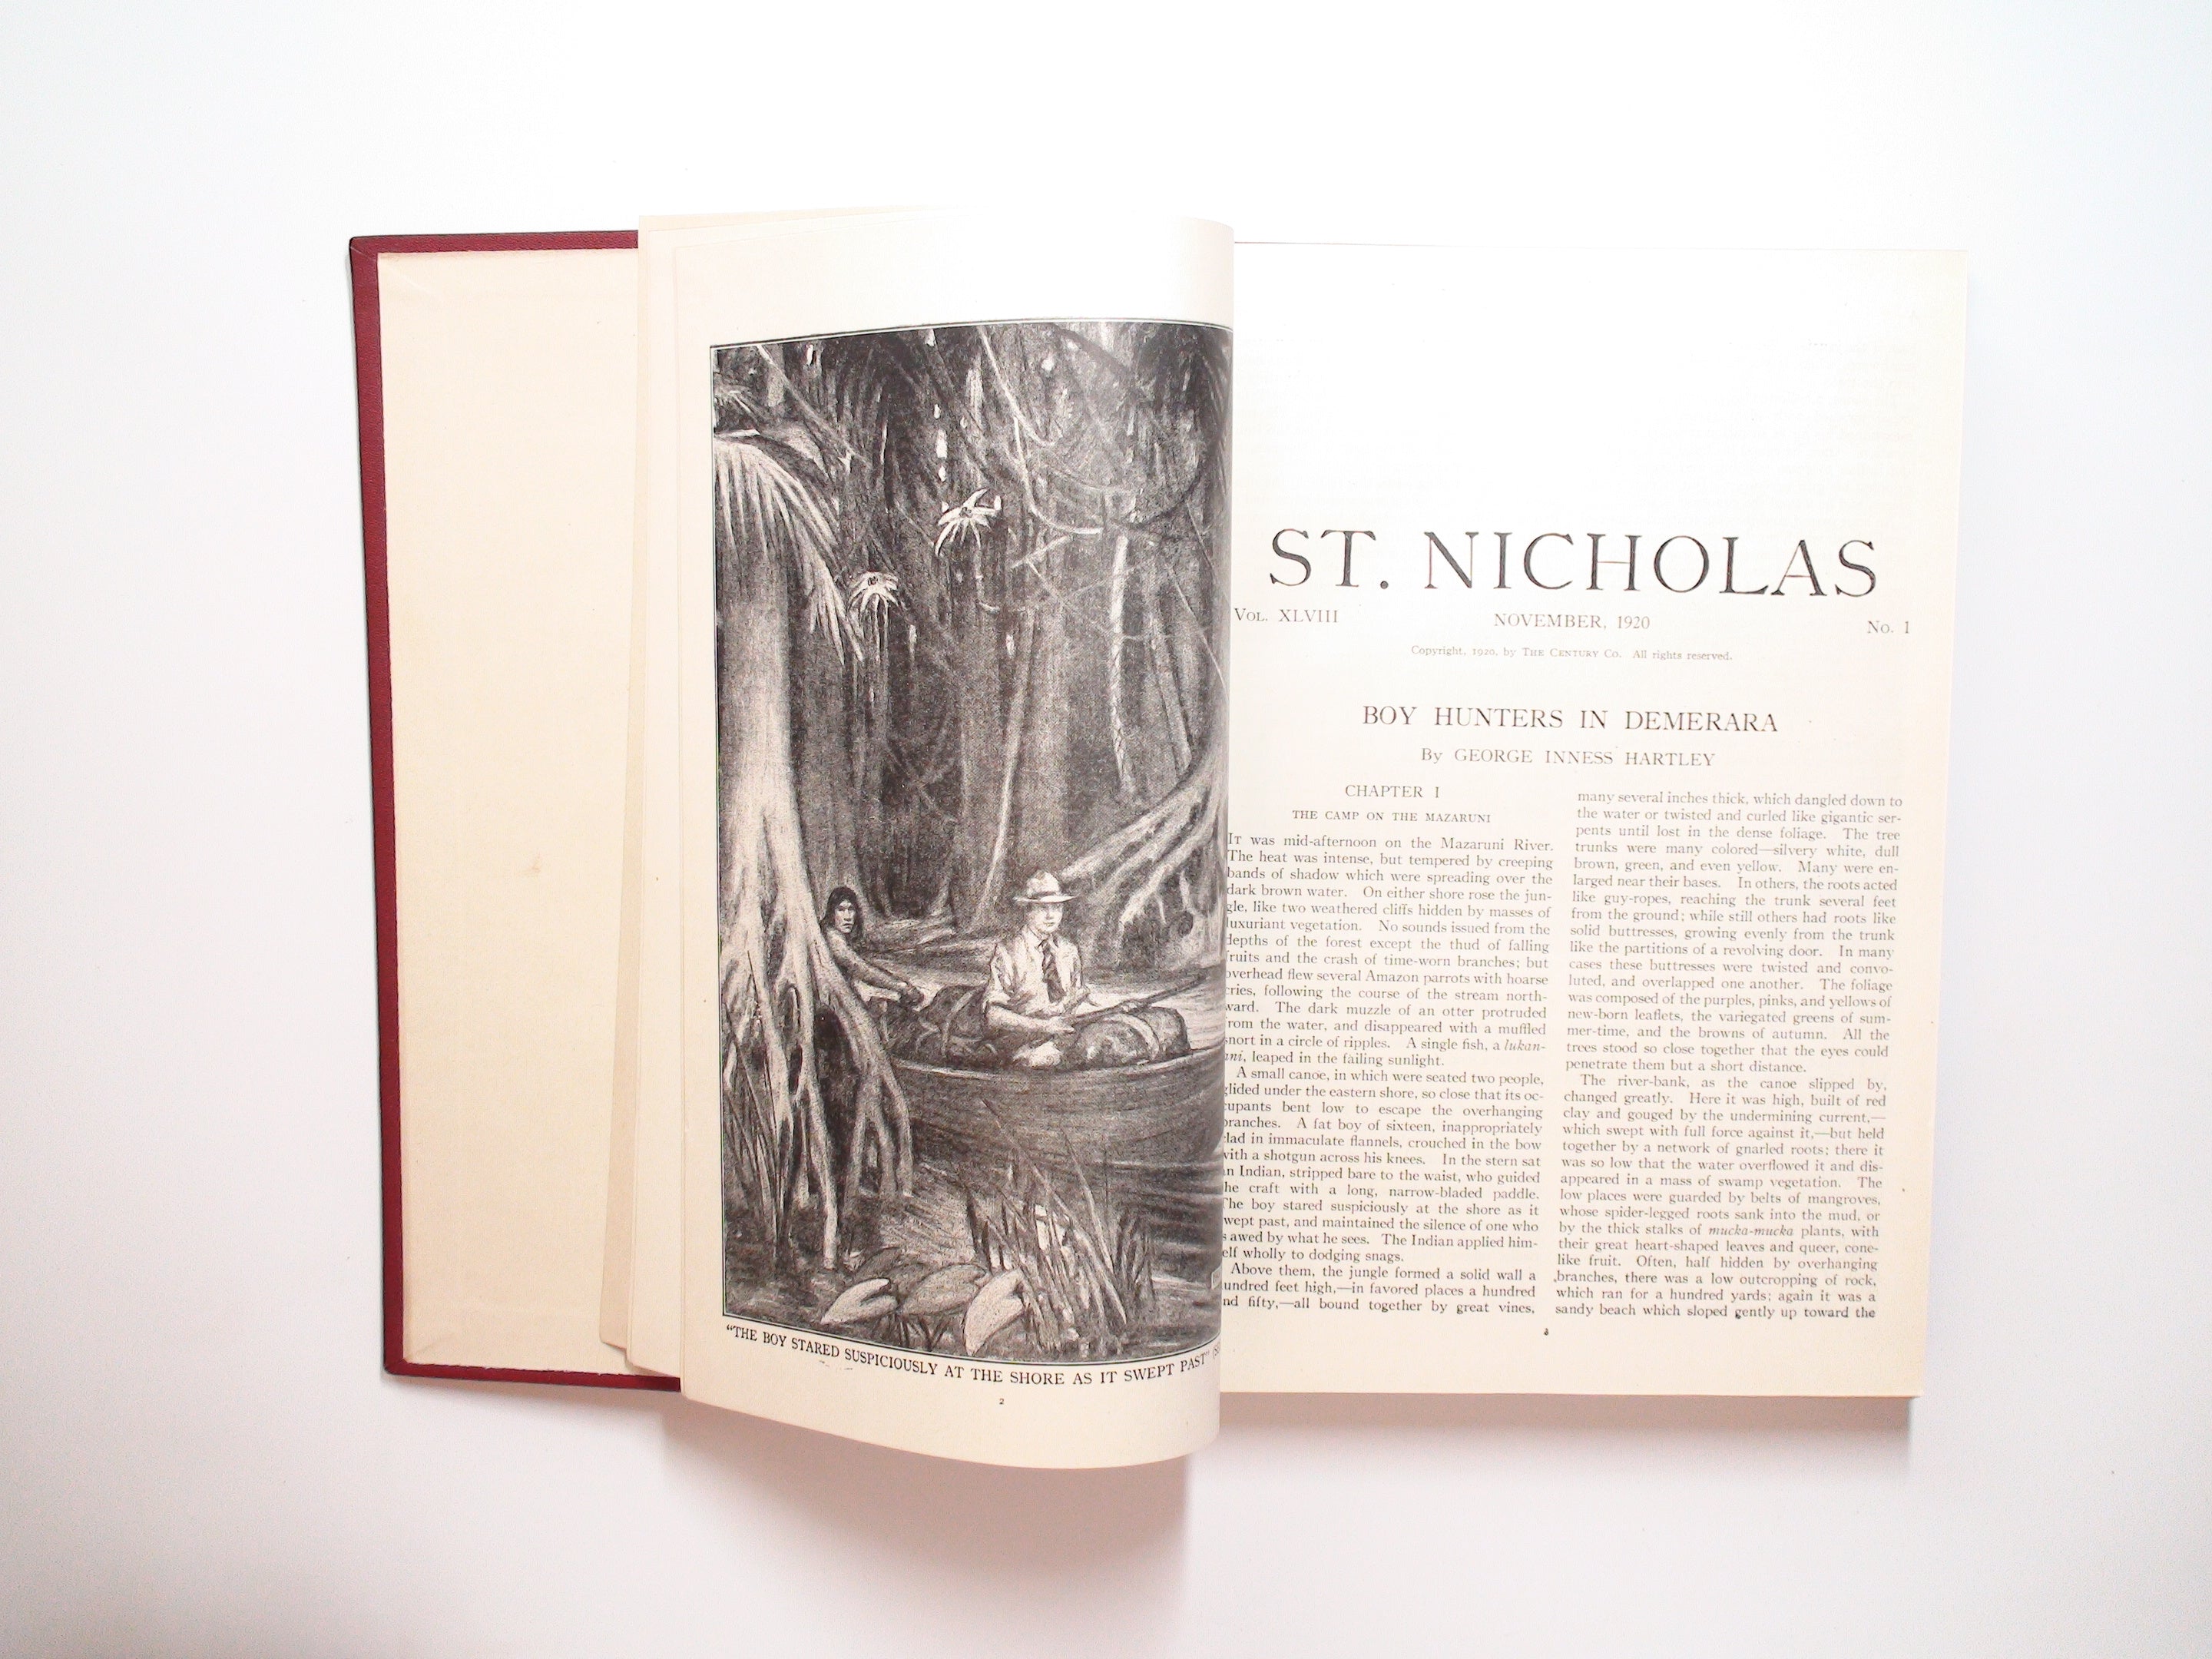 St. Nicholas Illustrated Children's Magazine, Vol XLVIII, Part I and II, 1921